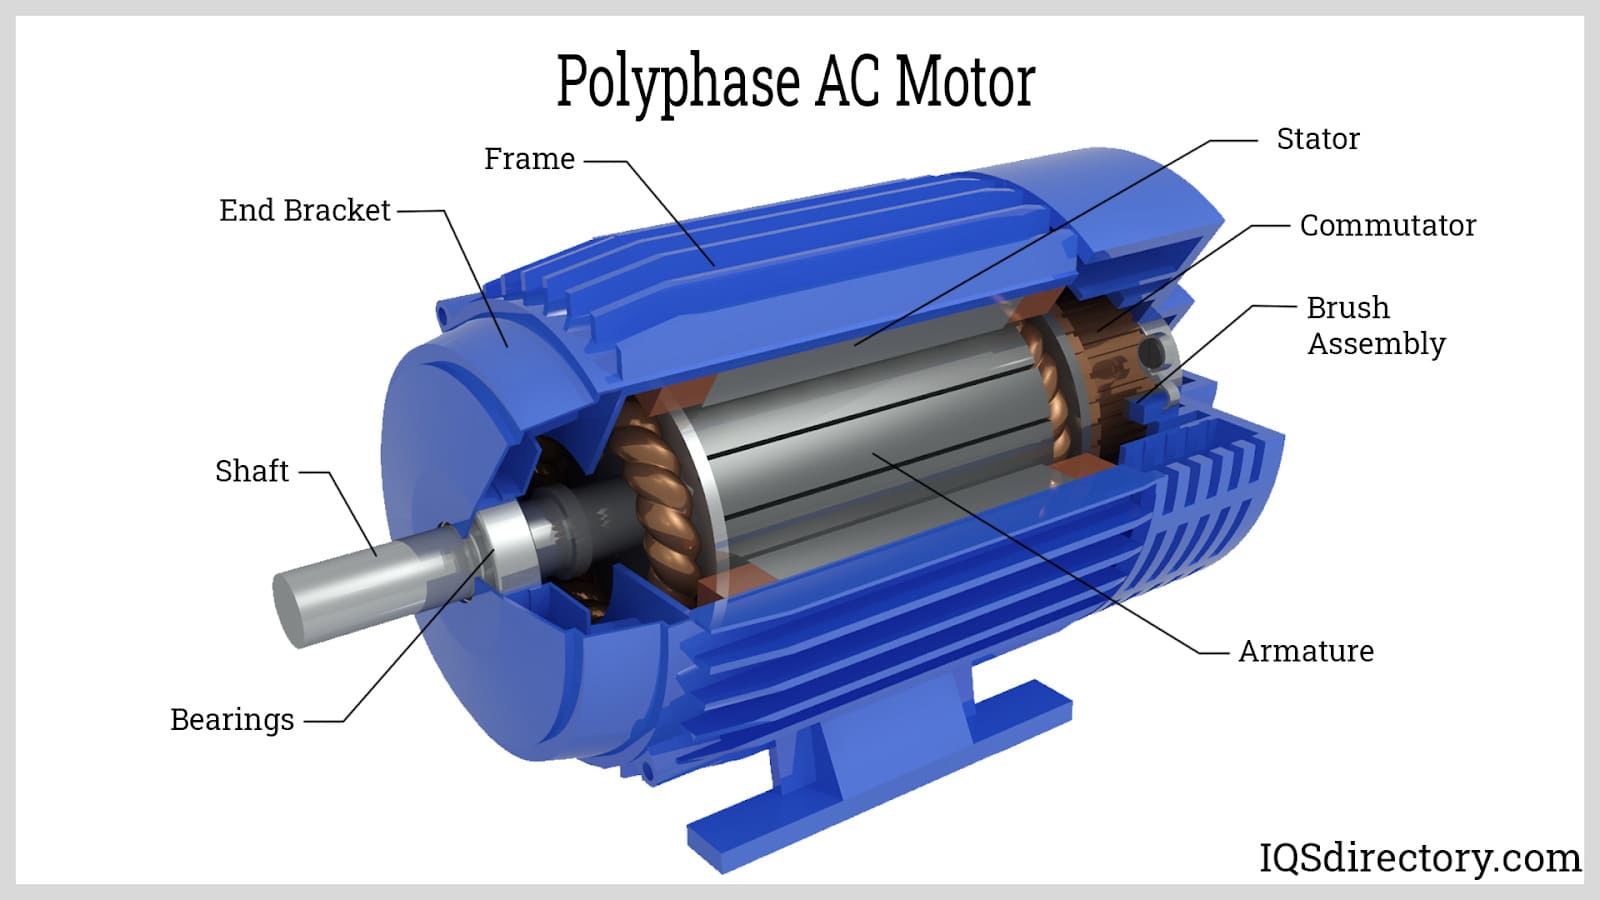 Polyphase AC Motor